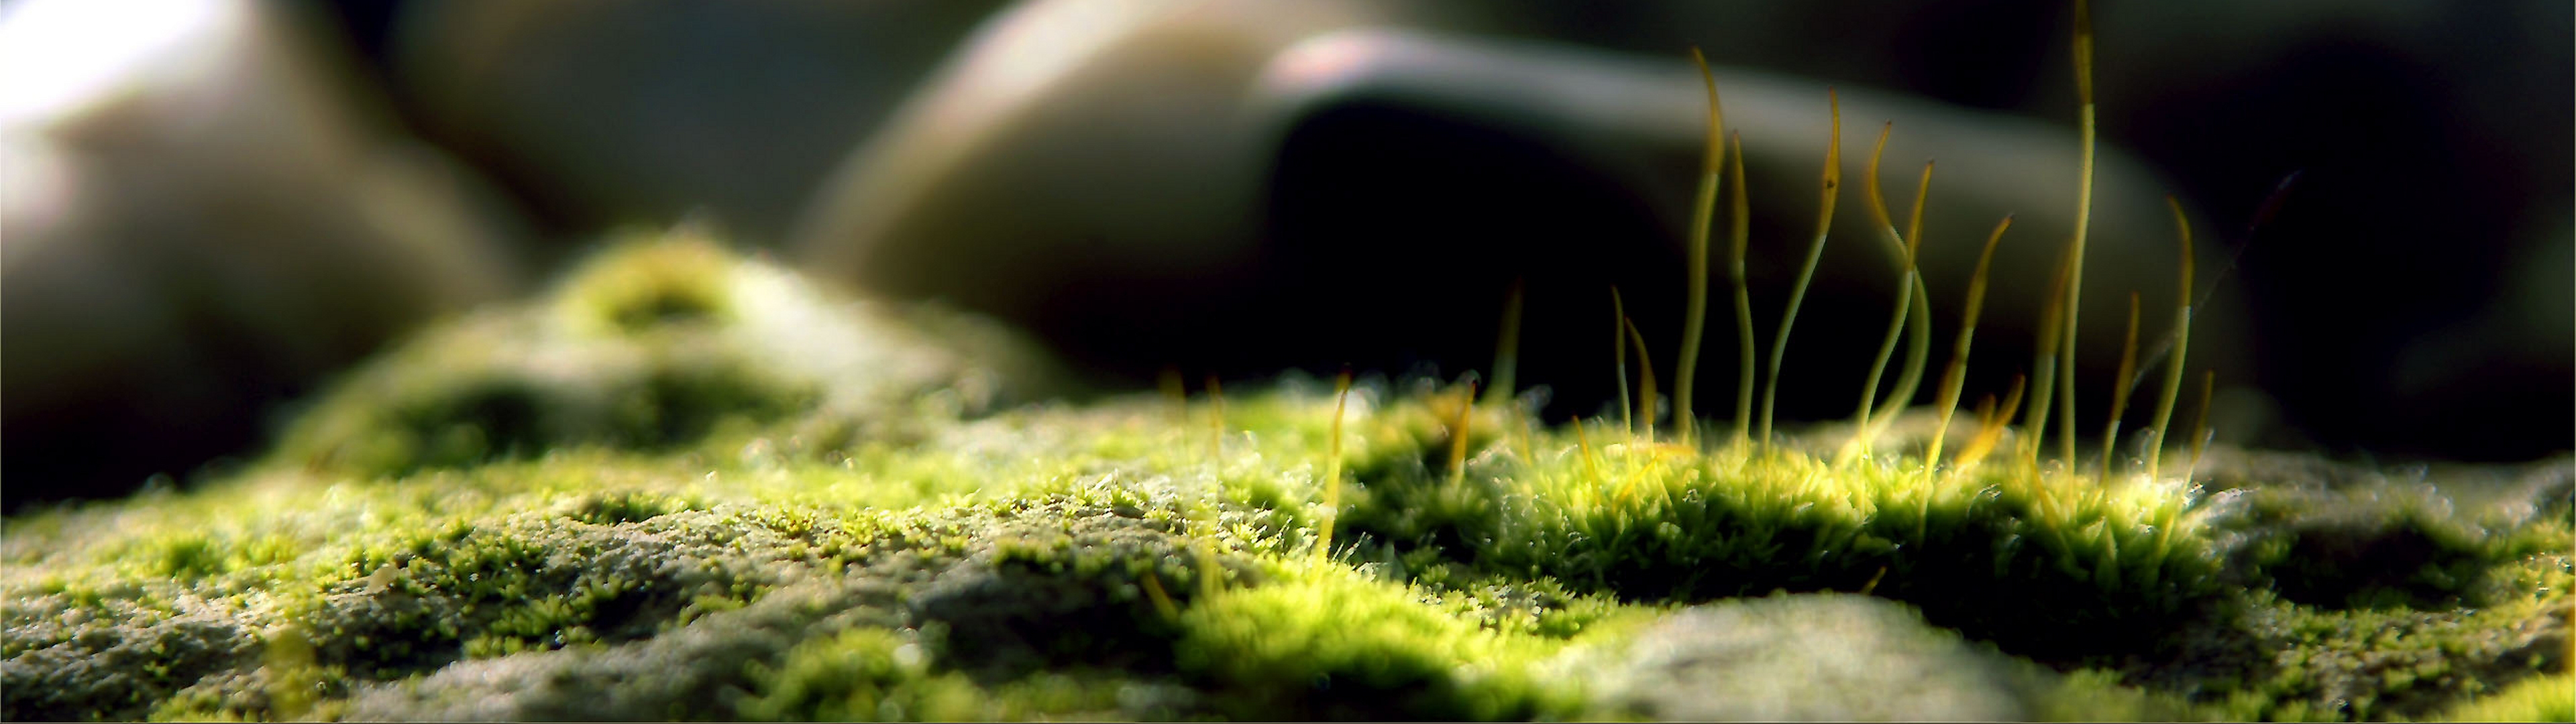 grass, macro, depth of field - desktop wallpaper